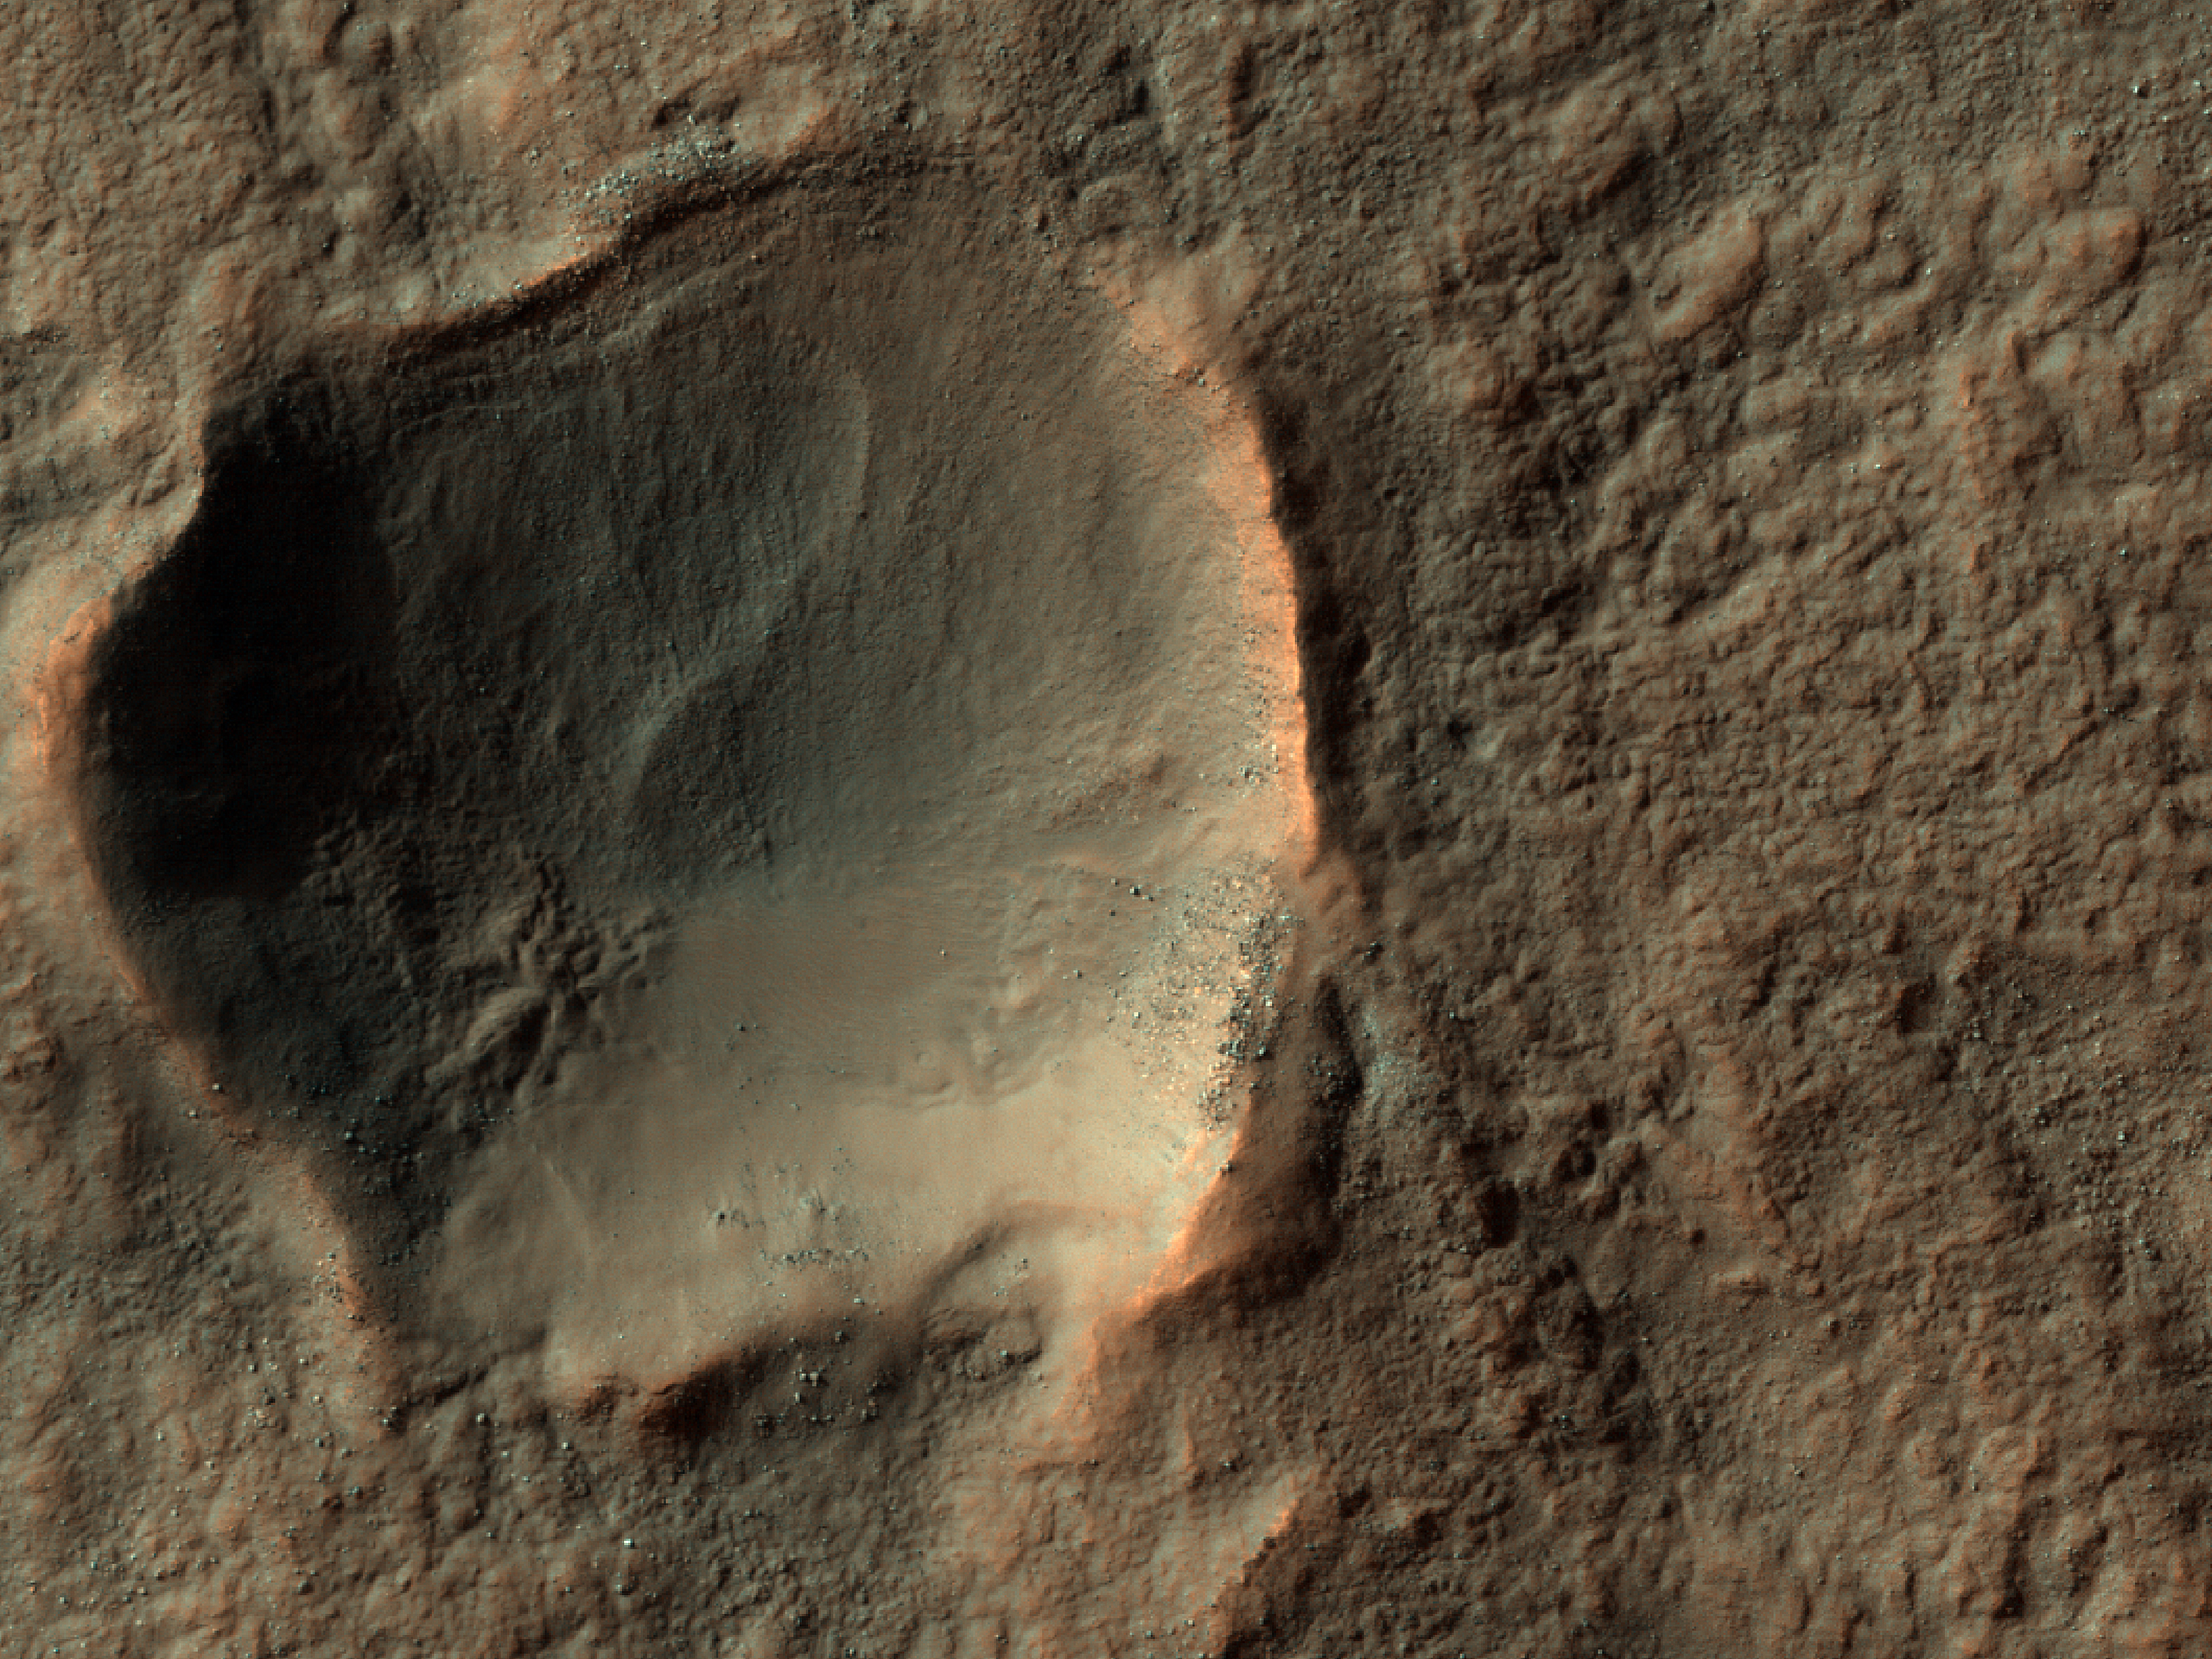 A Crater in Thaumasia Fossae